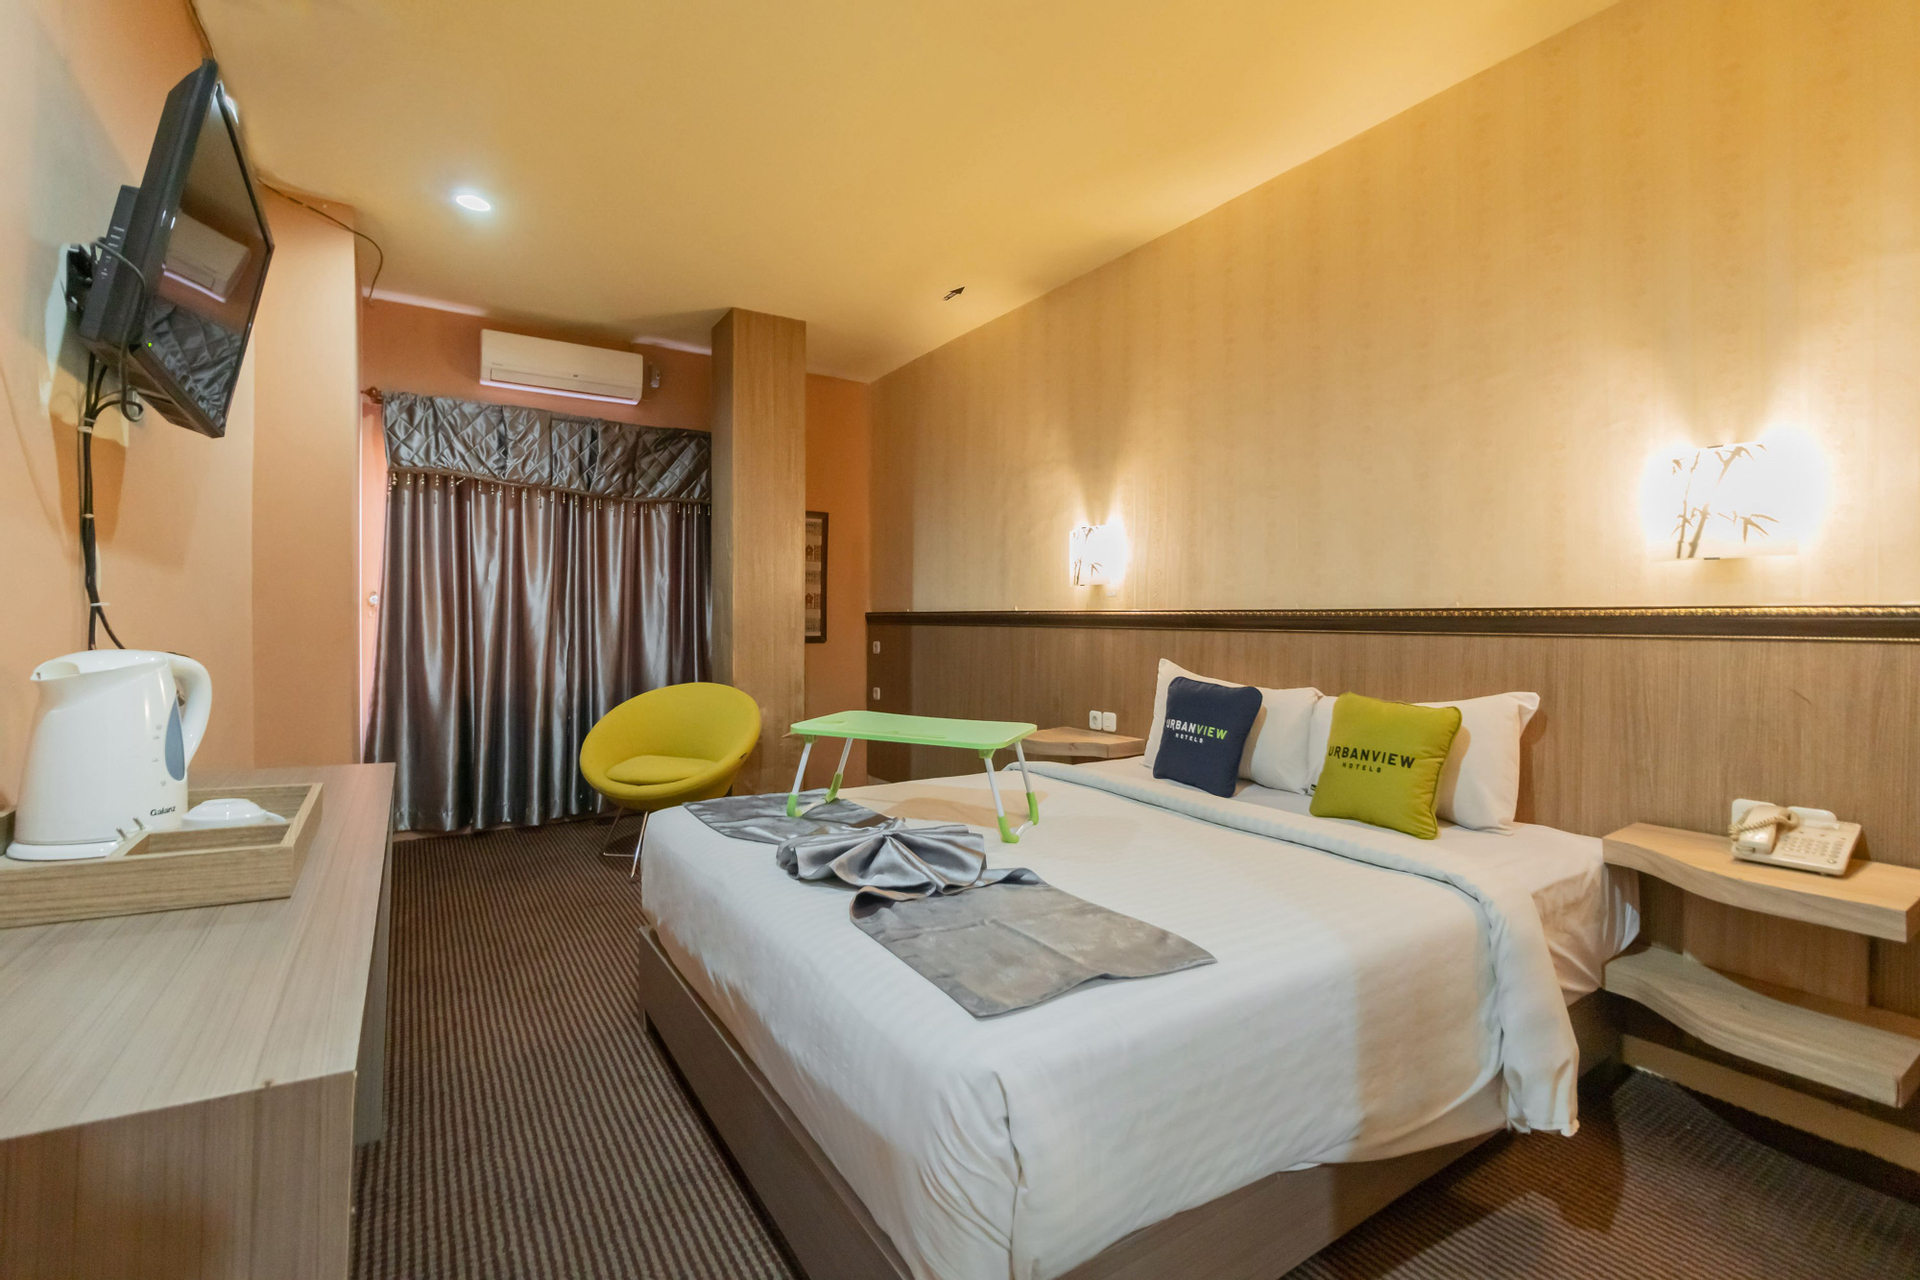 Bedroom 1, Urbanview Hotel Best skip Palembang, Palembang